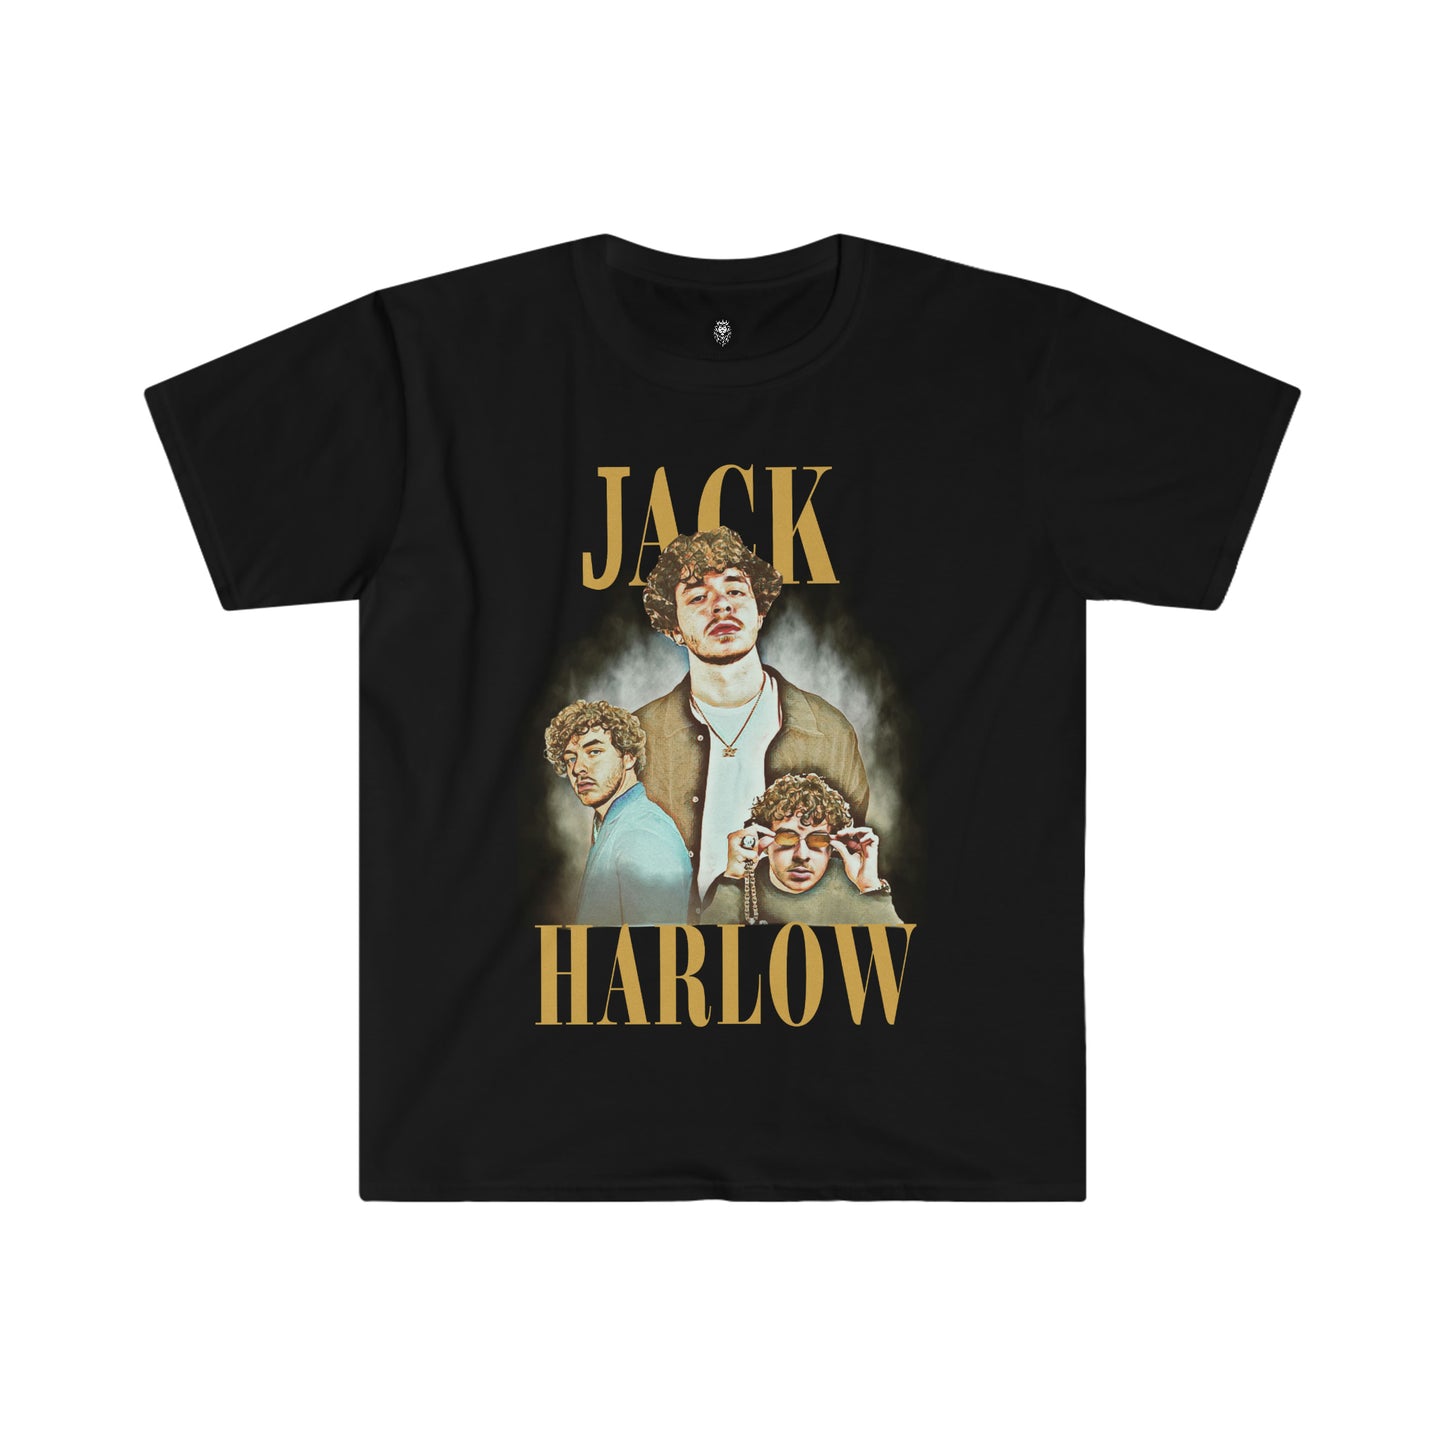 JACK HARLOW T-Shirt